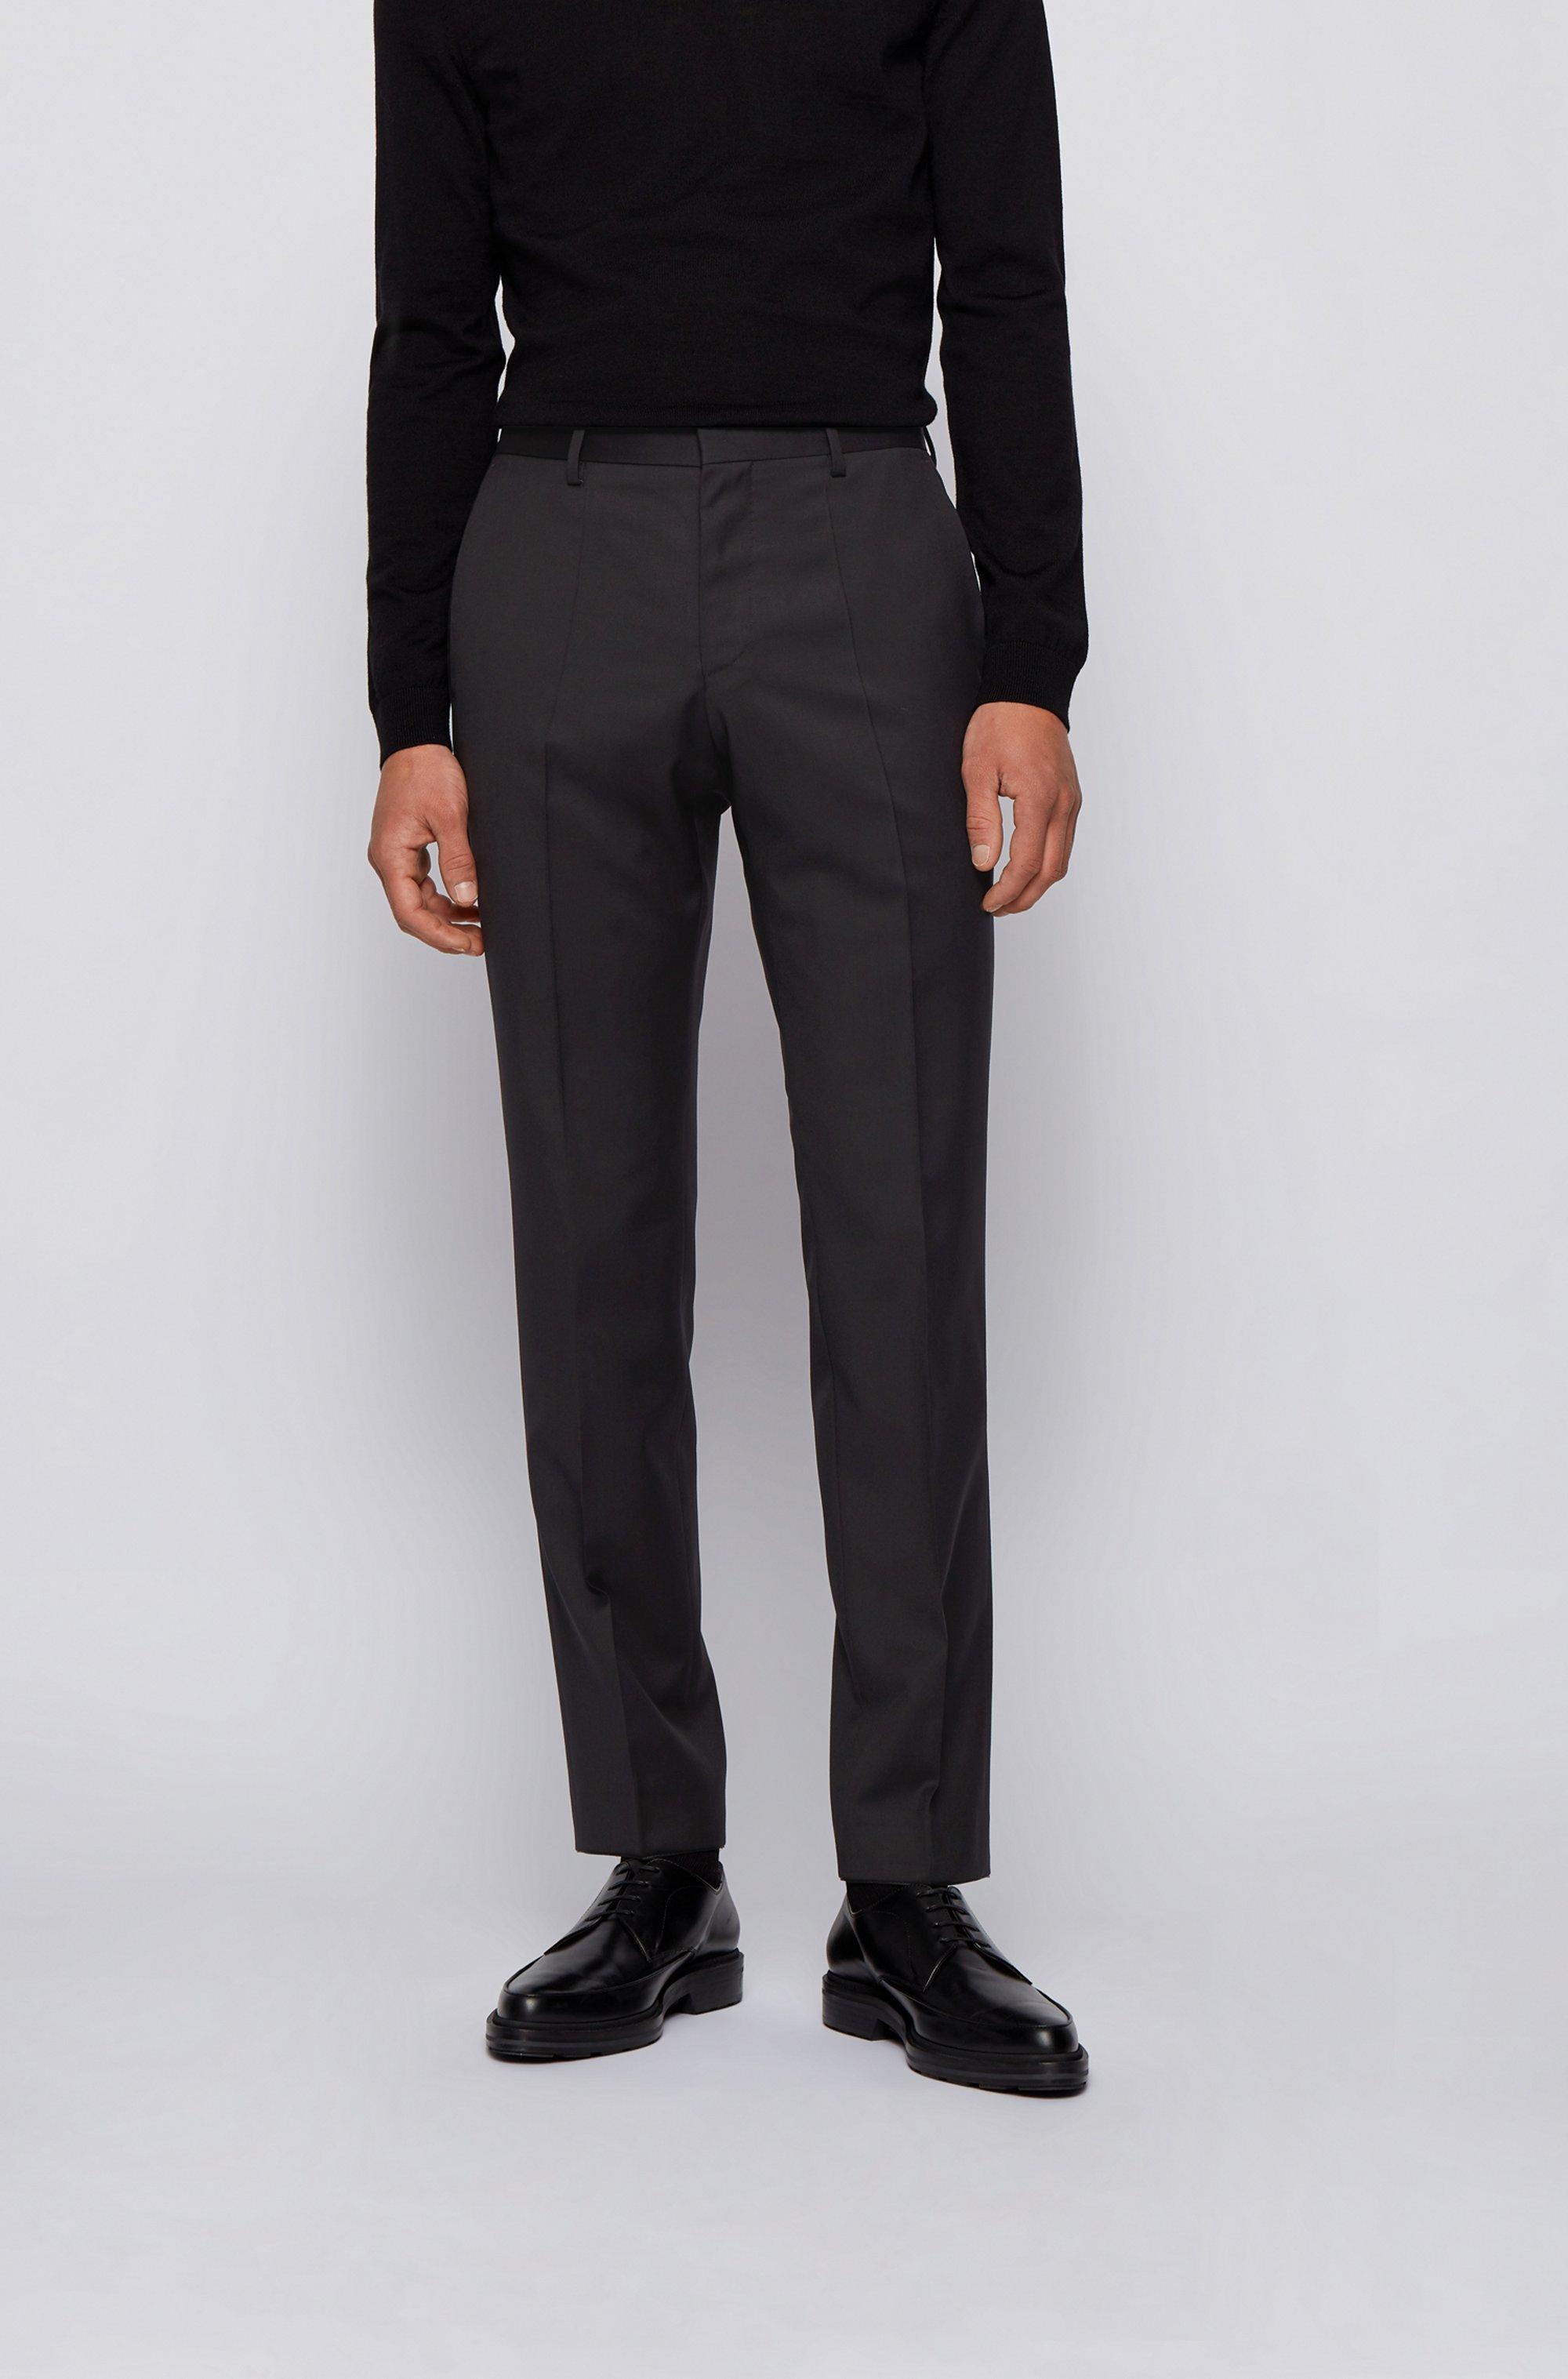 BOSS by HUGO BOSS Gibson Cyl Flat Solid Slim Wool Dress Pants in for Men - Lyst